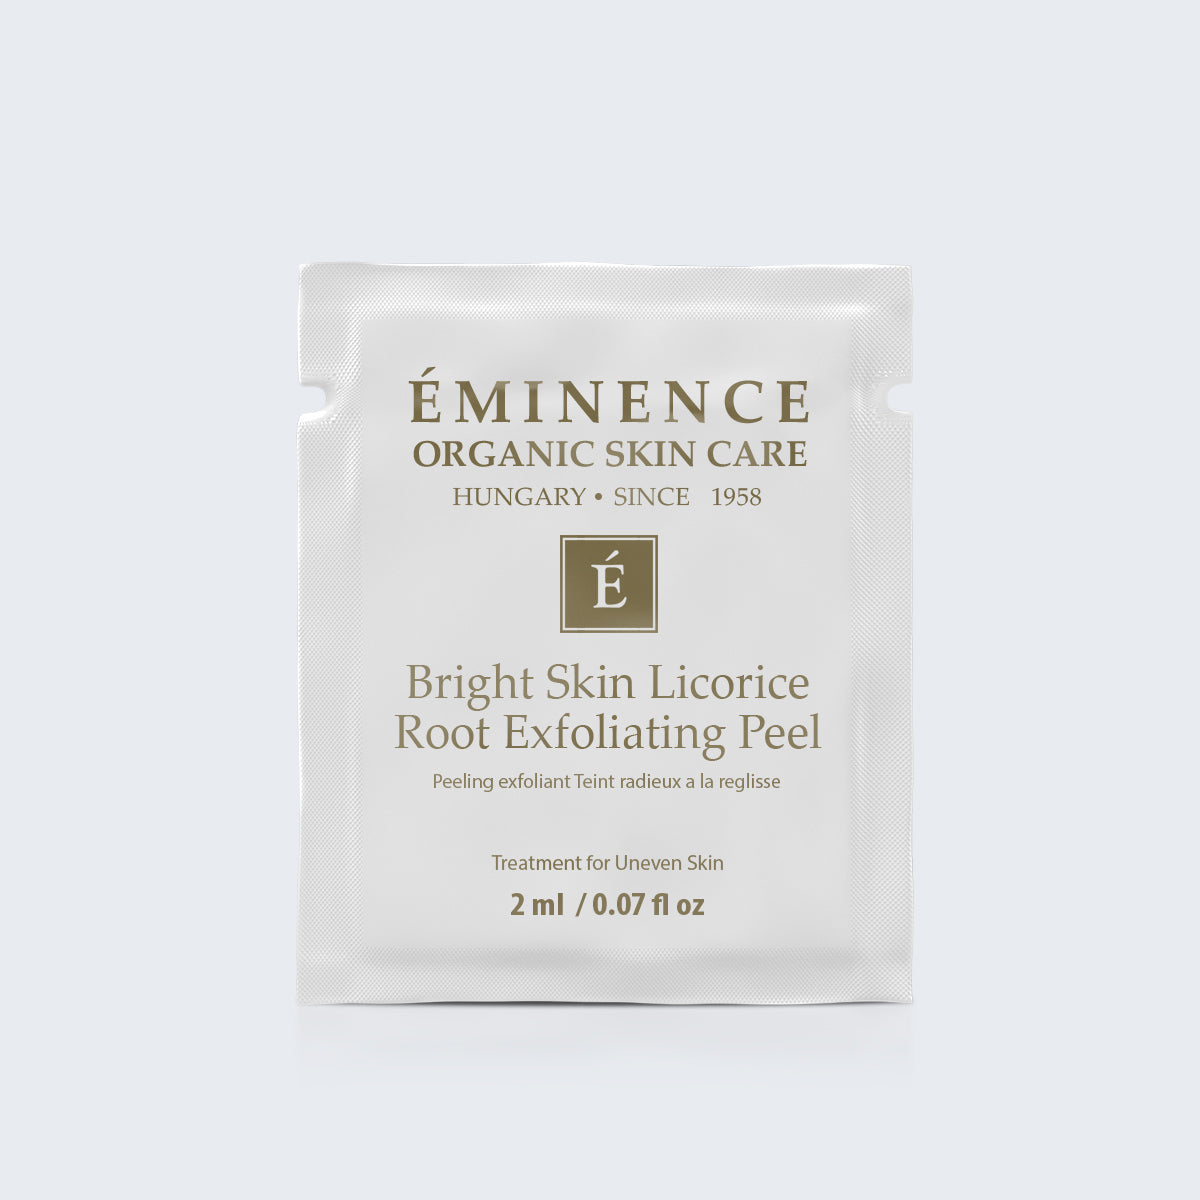 Eminence Organics Bright Skin Licorice Root Exfoliating Peel Card Sample